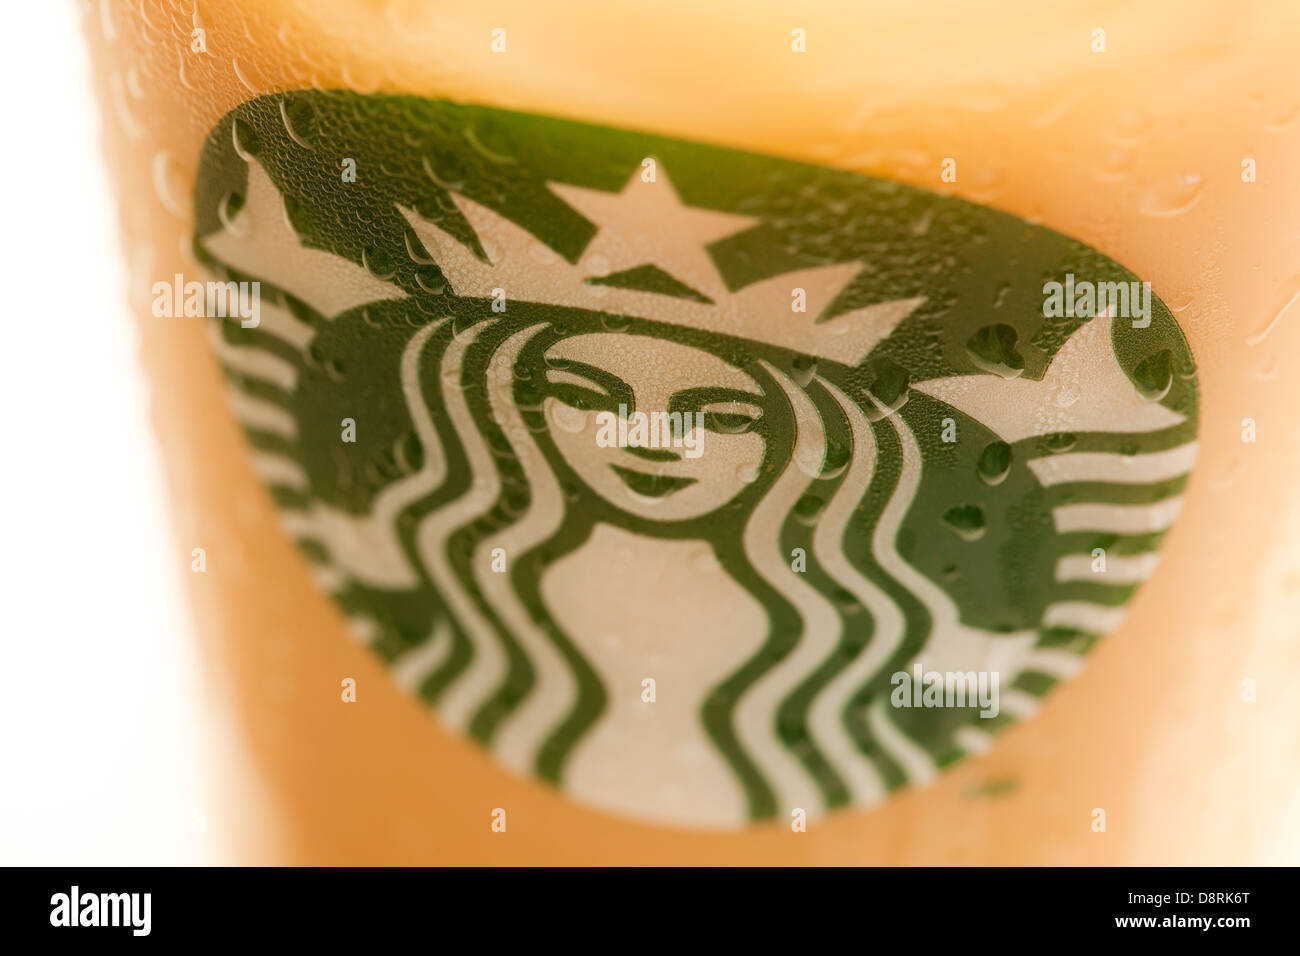 Starbucks Iced coffee Stock Photo